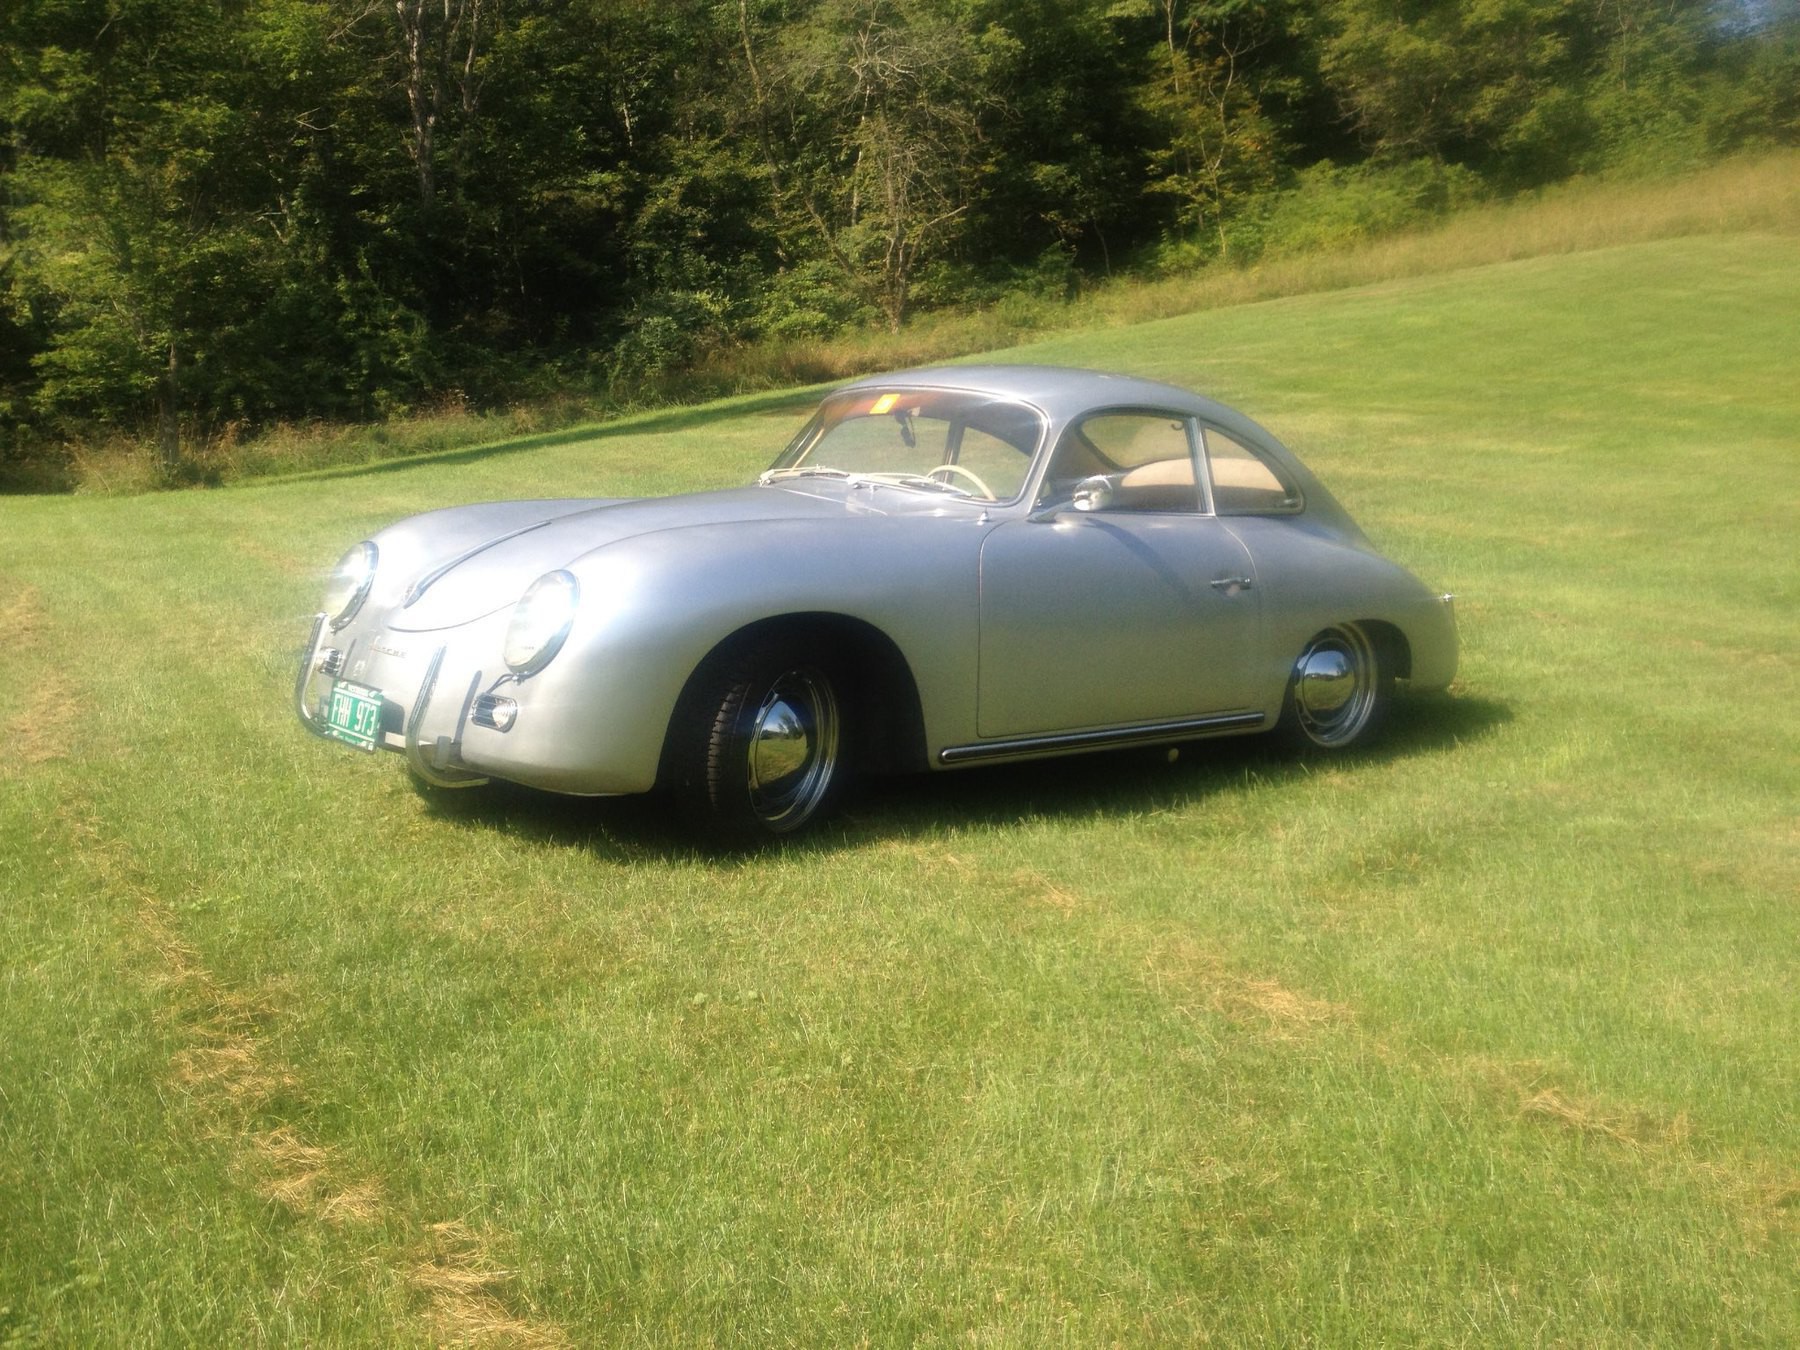 Chrome '60s era Porsche in a sunny field.